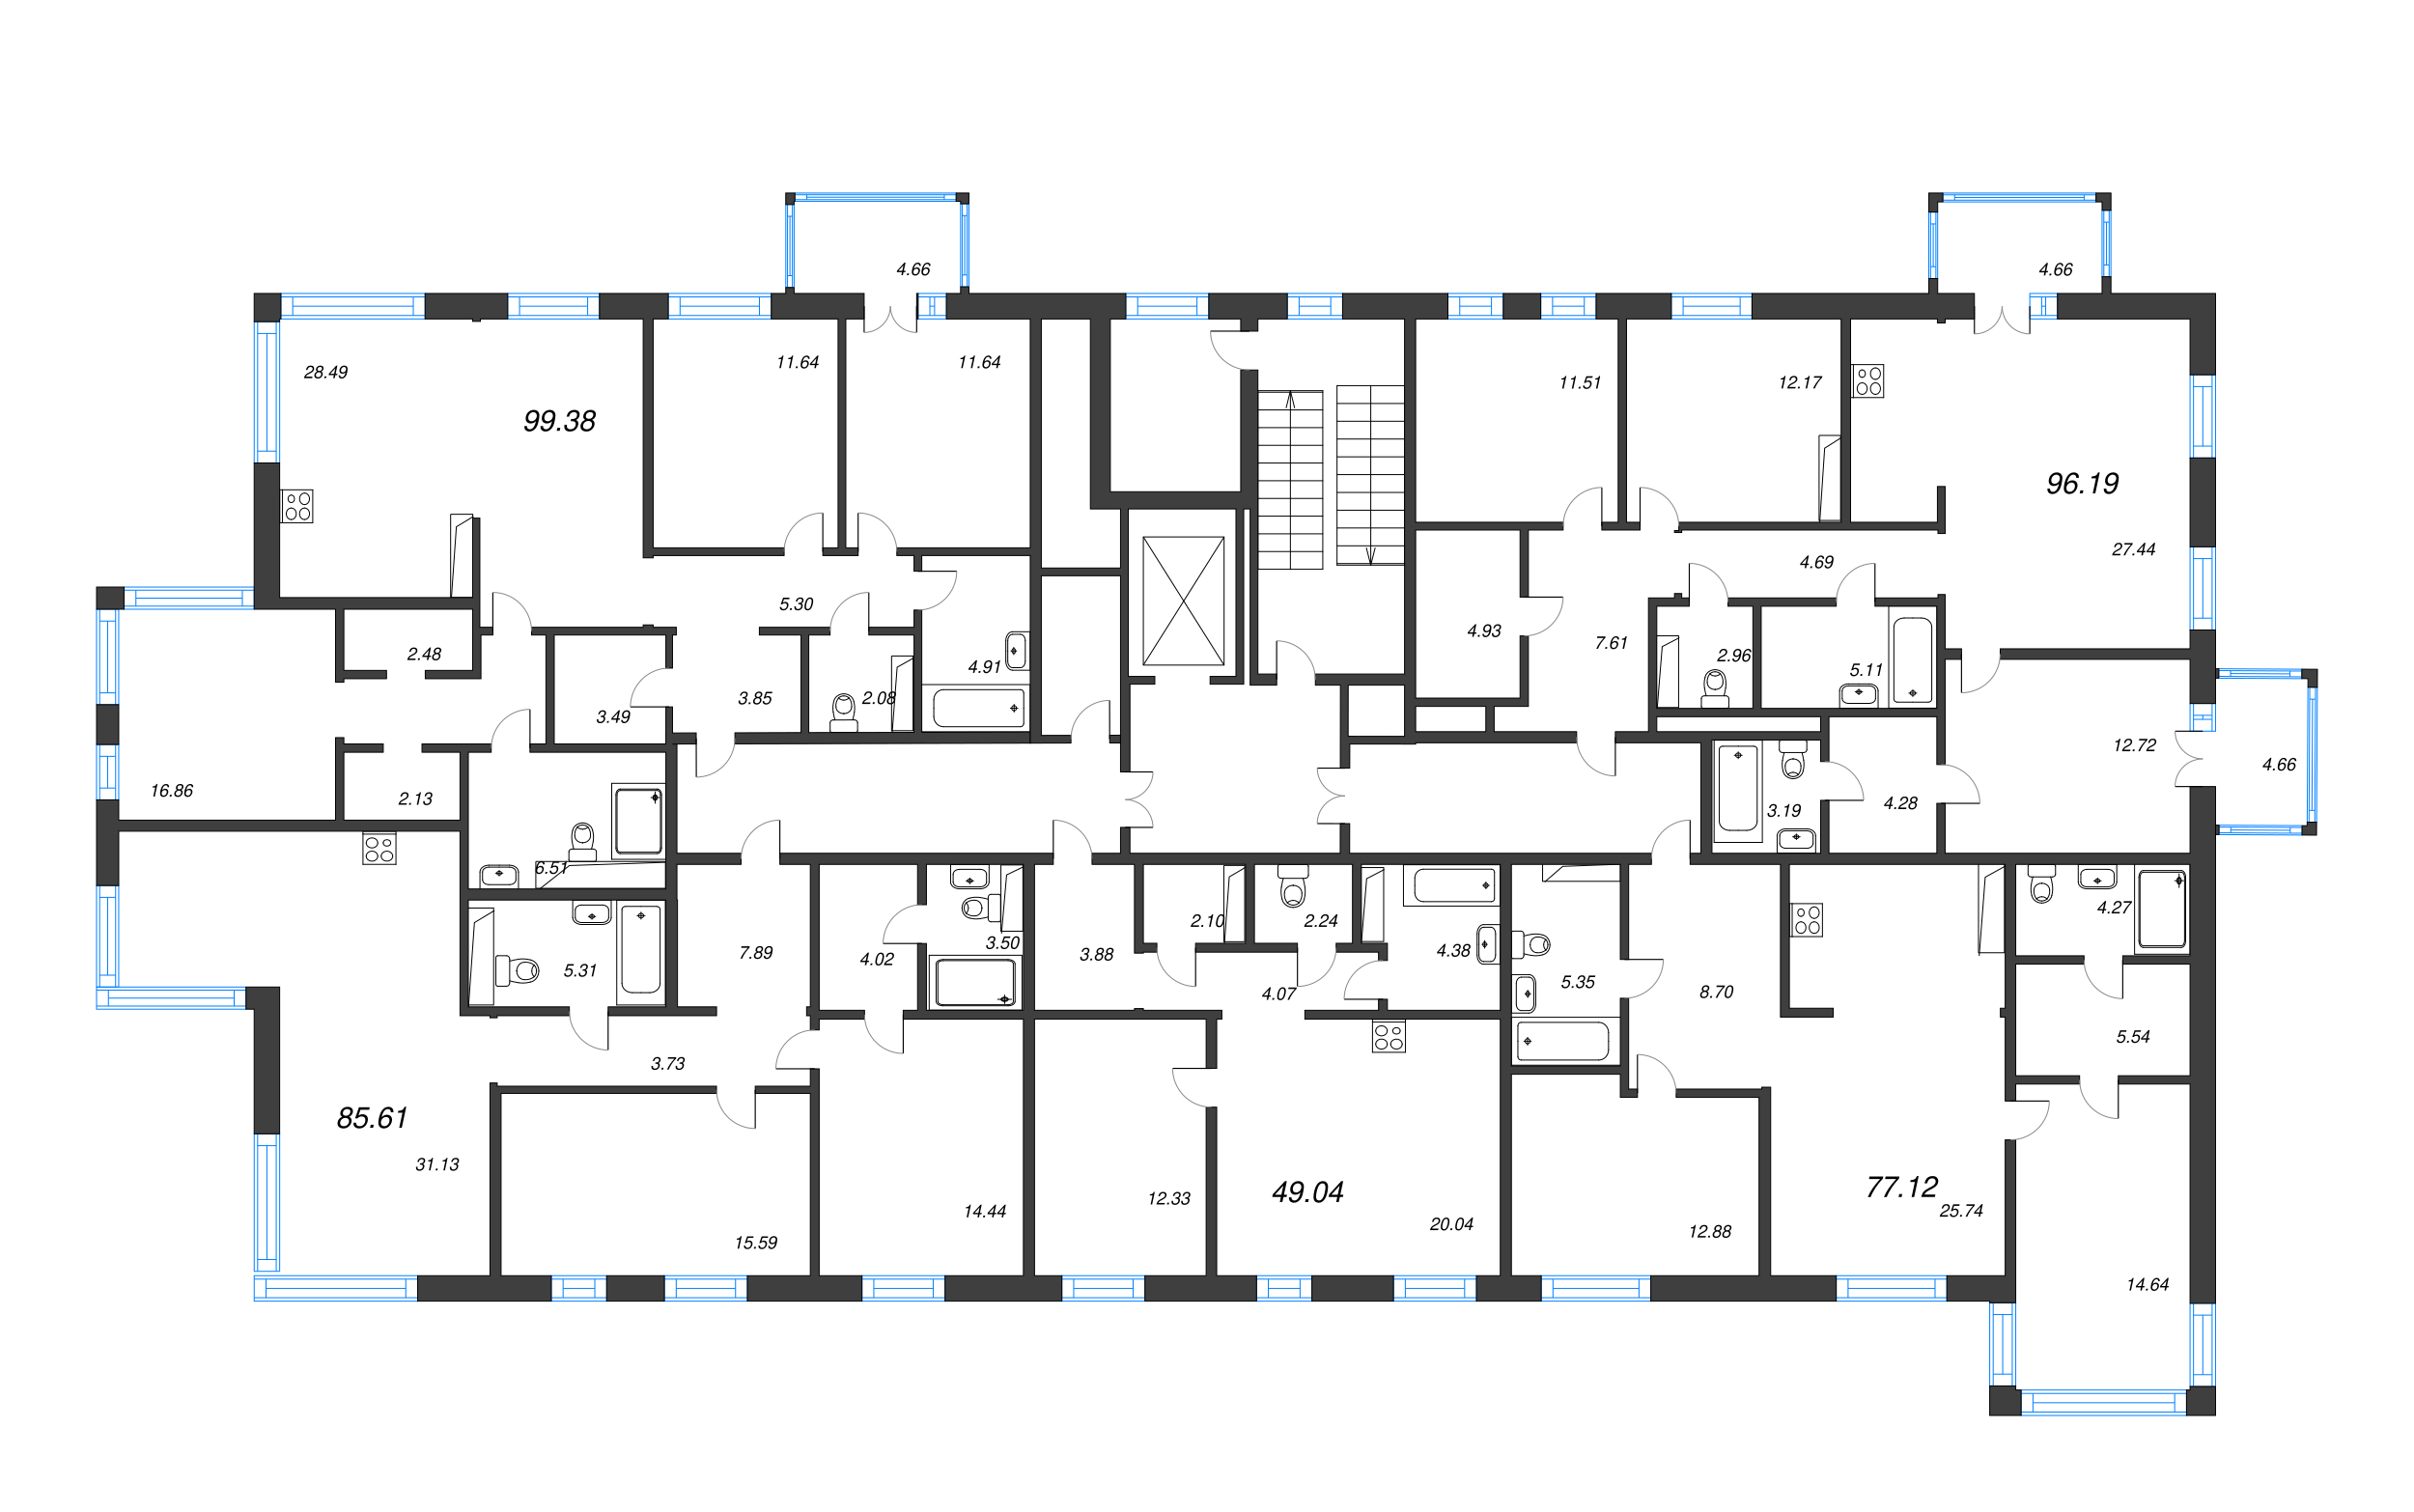 4-комнатная (Евро) квартира, 96.19 м² - планировка этажа